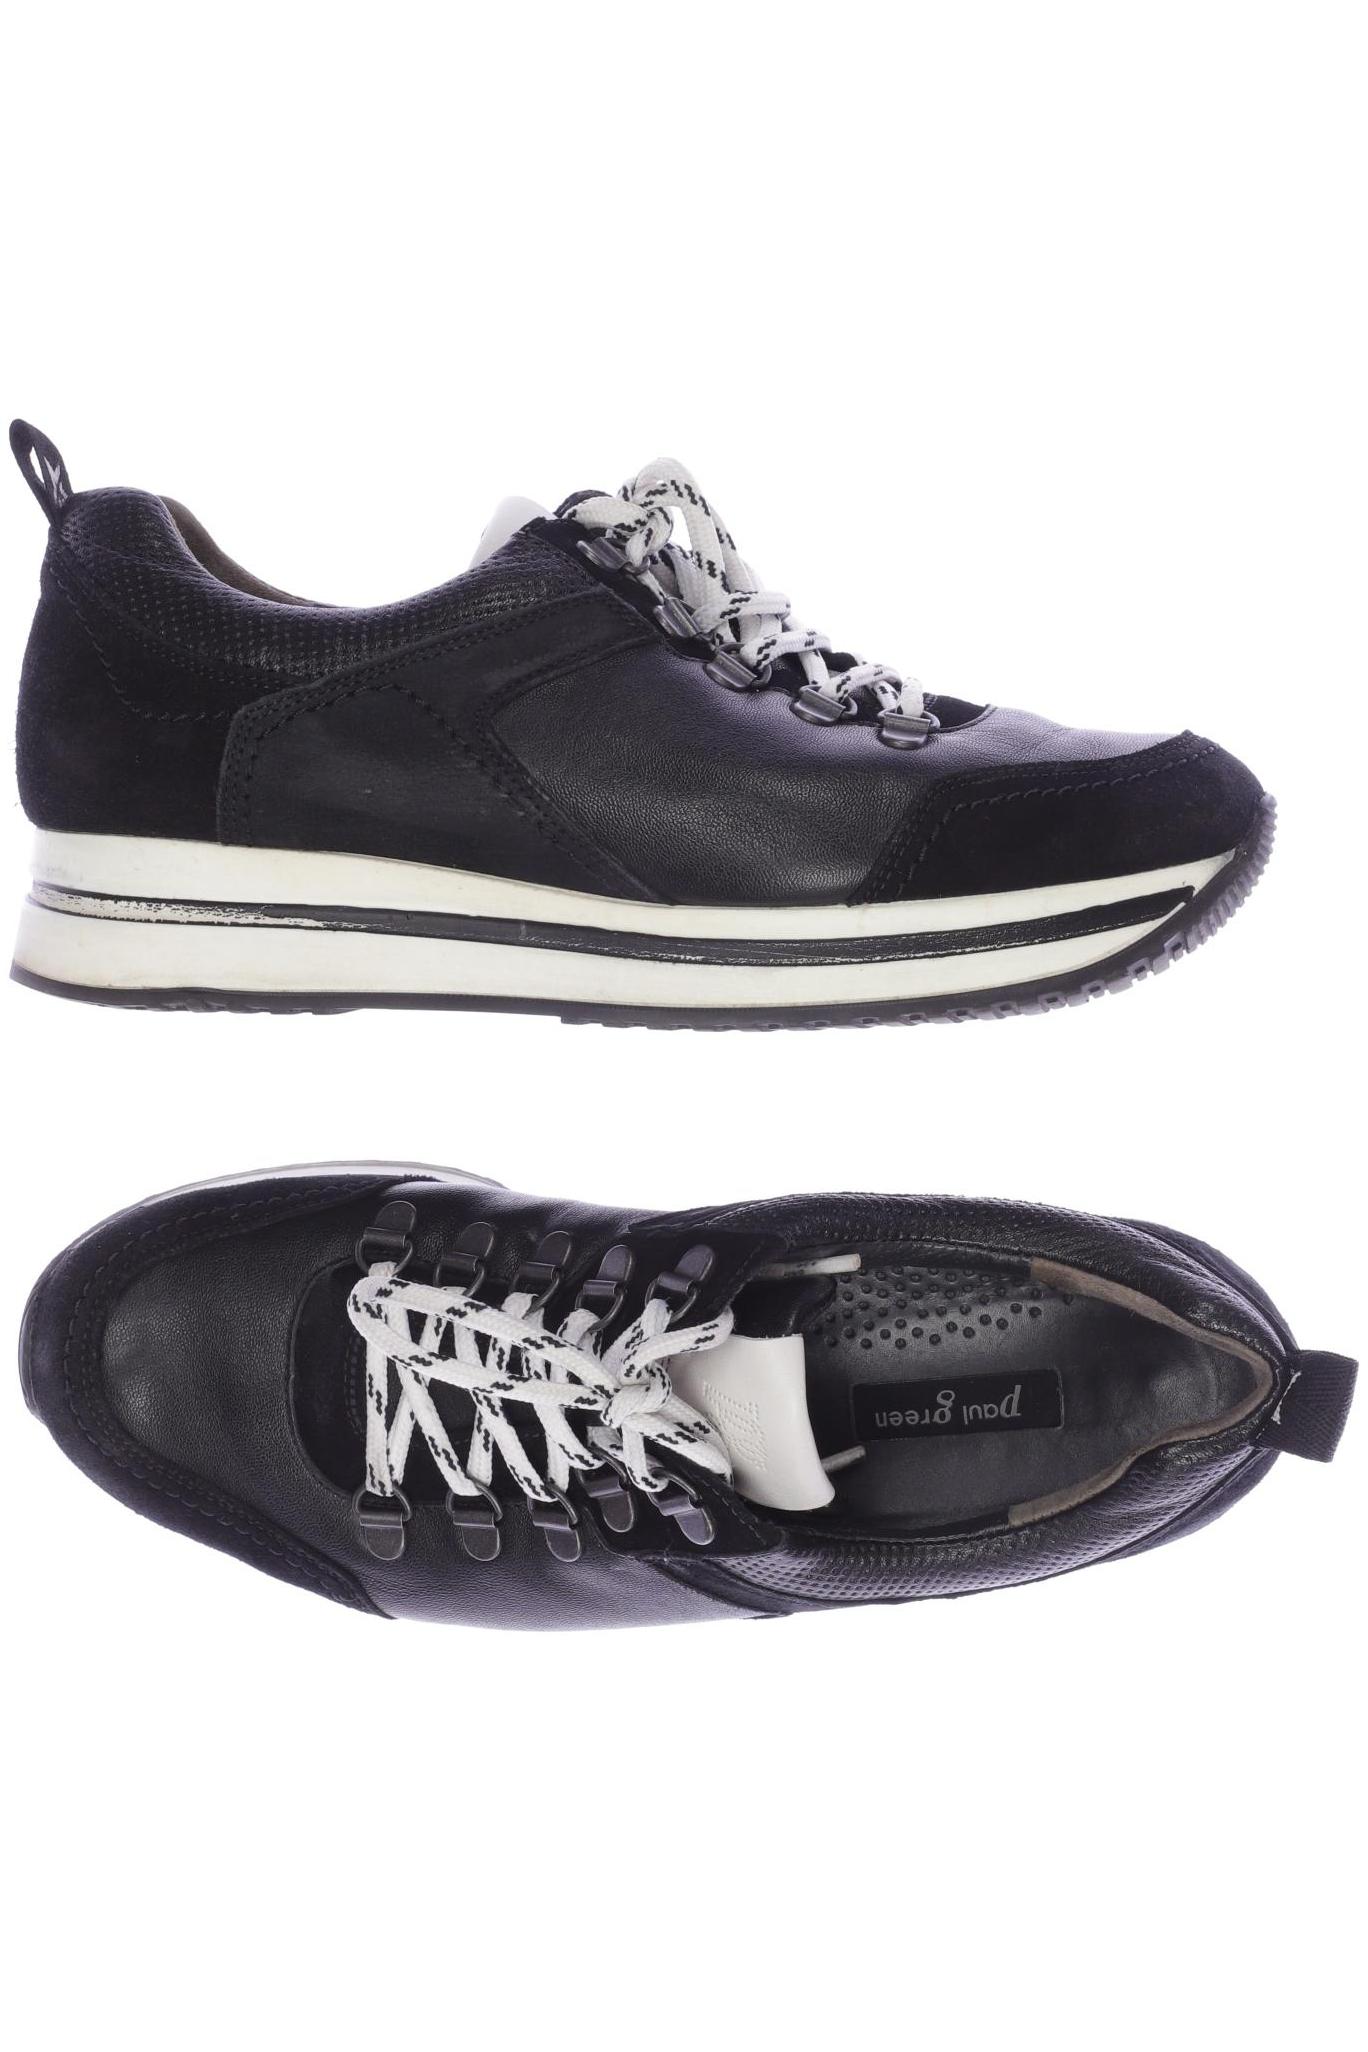 Paul Green Damen Sneakers, schwarz, Gr. 4.5 von Paul Green